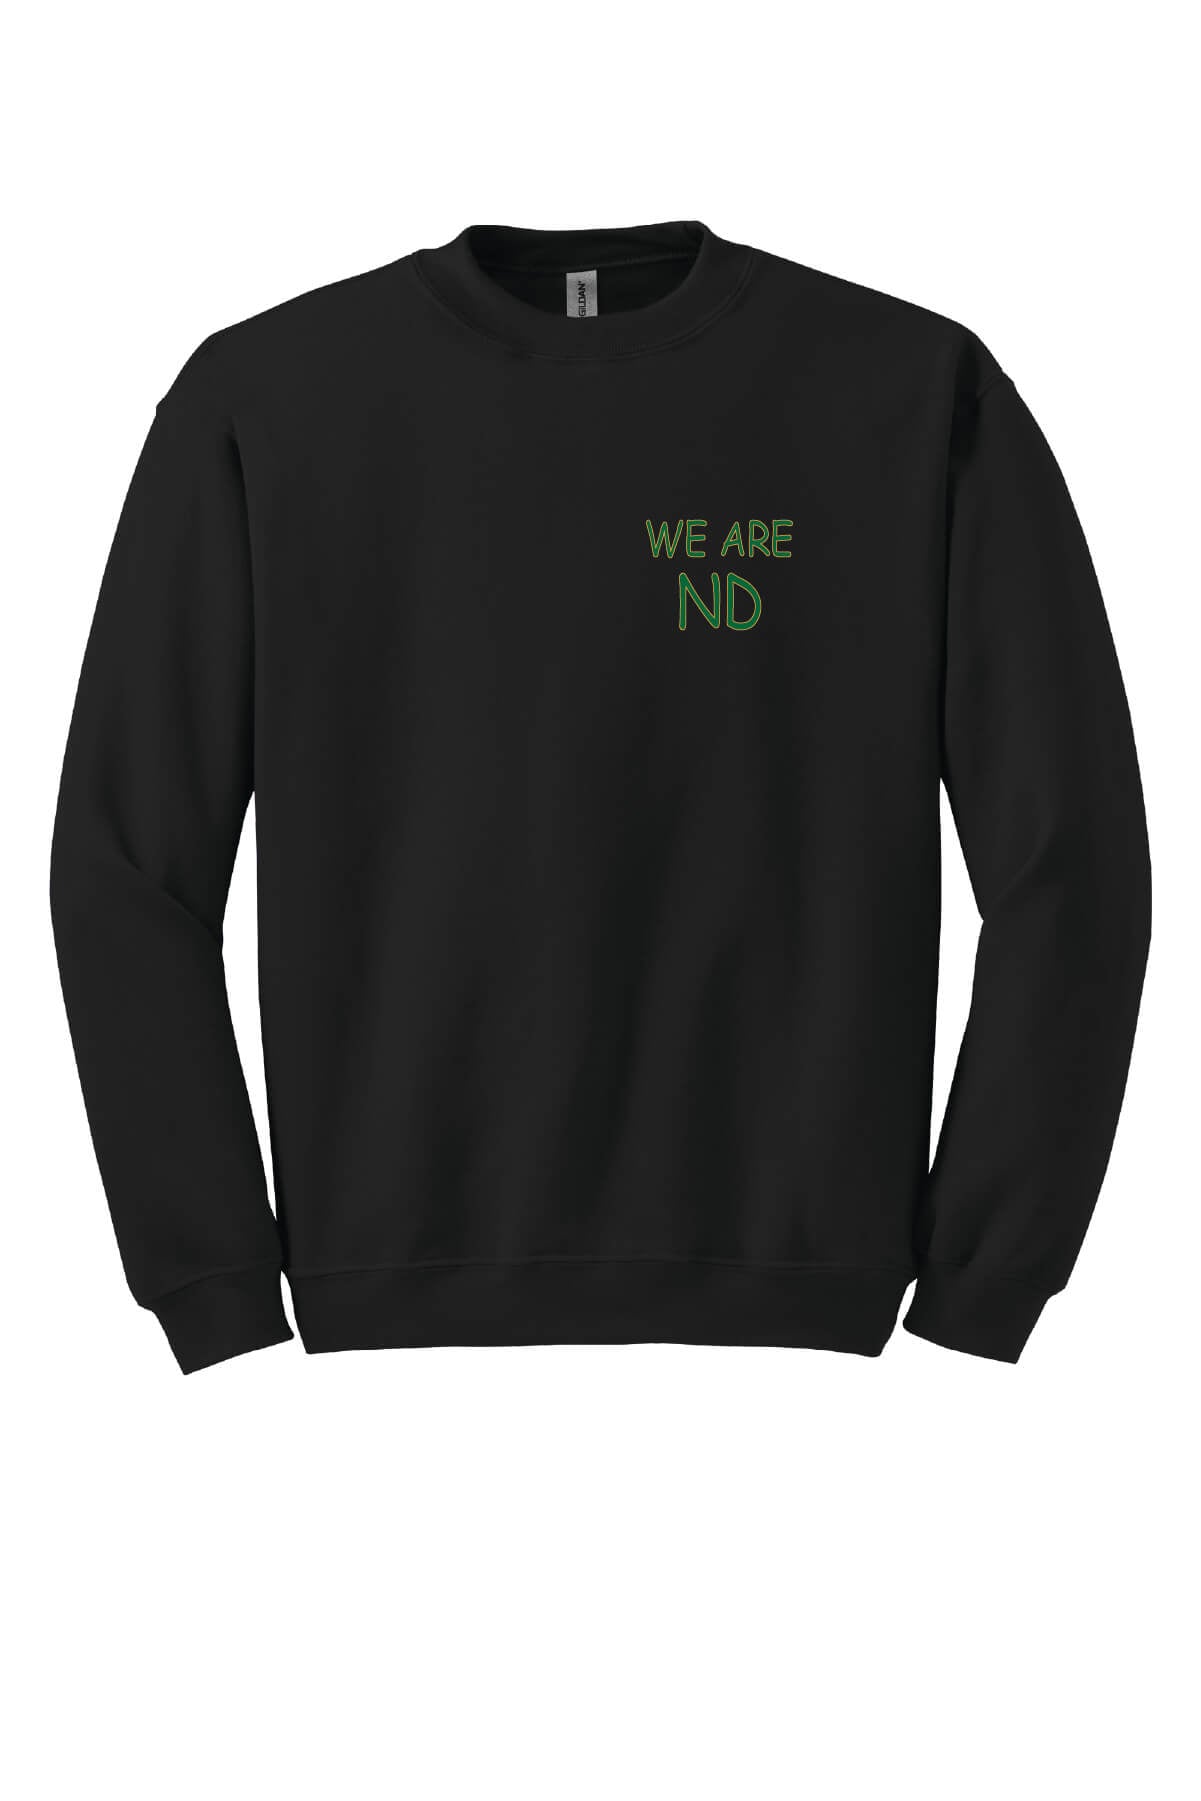 We Are ND Crewneck Sweatshirt front-black